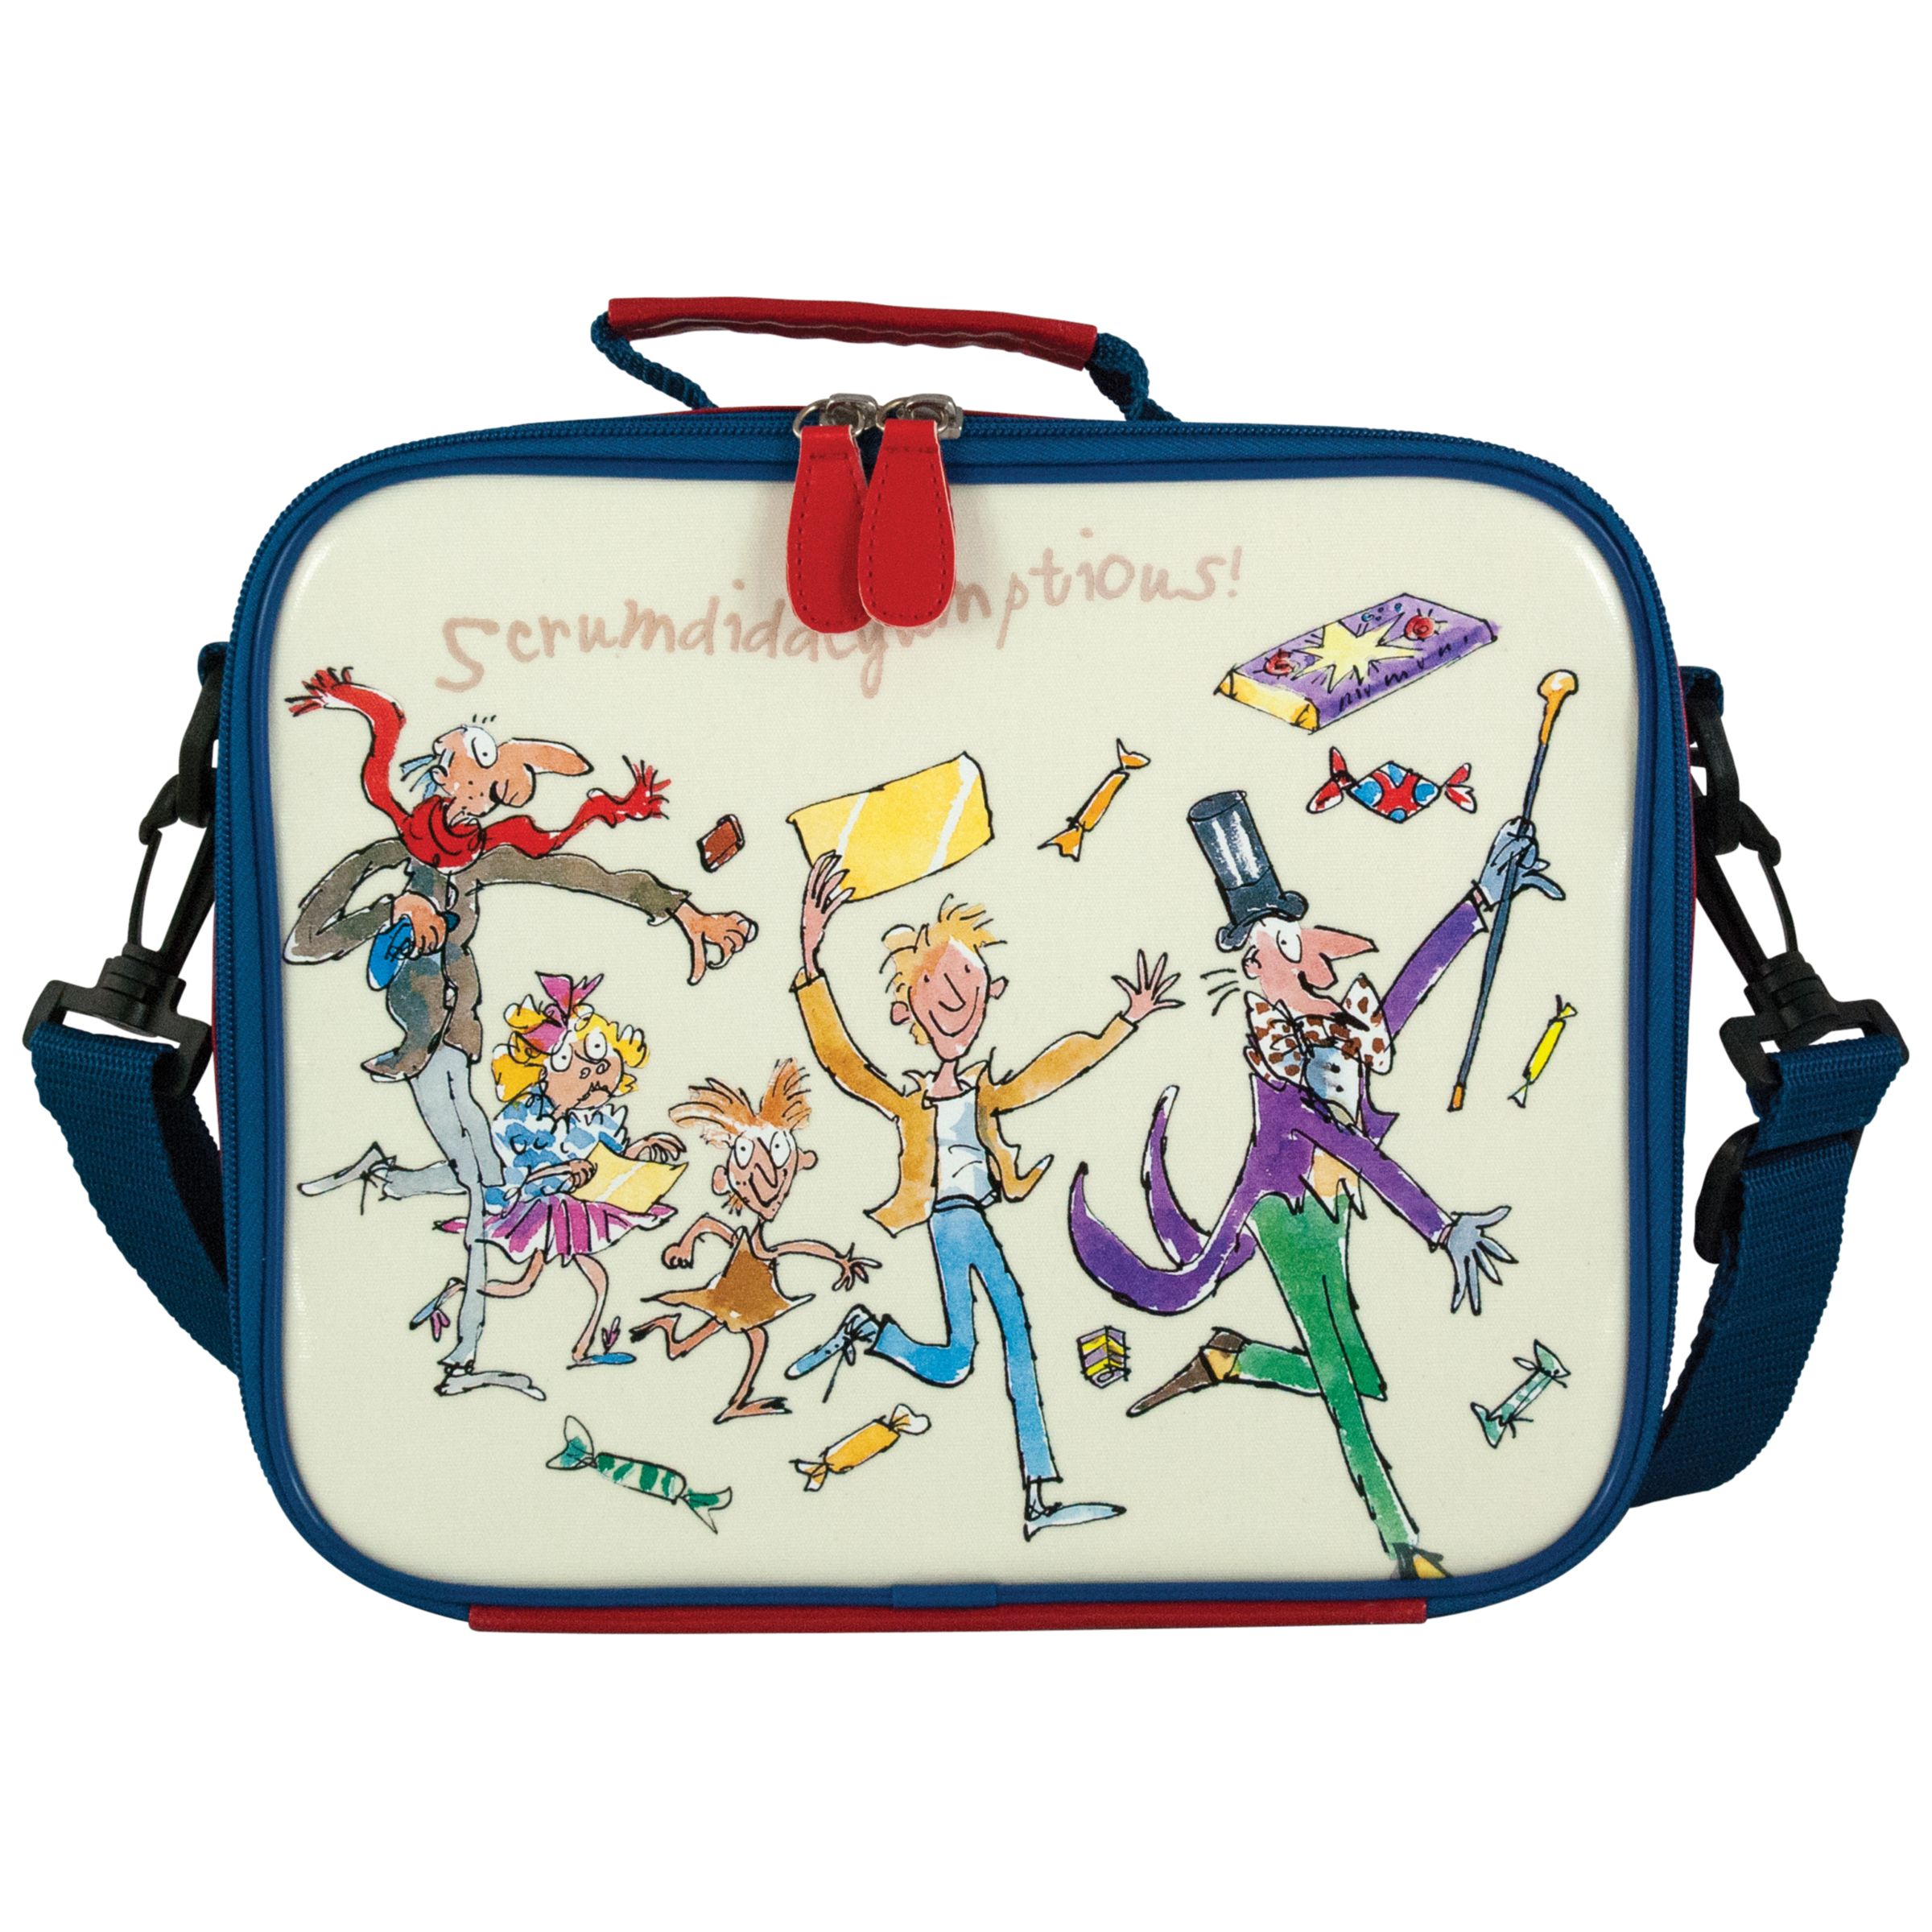 Roald Dahl Lunch Bag